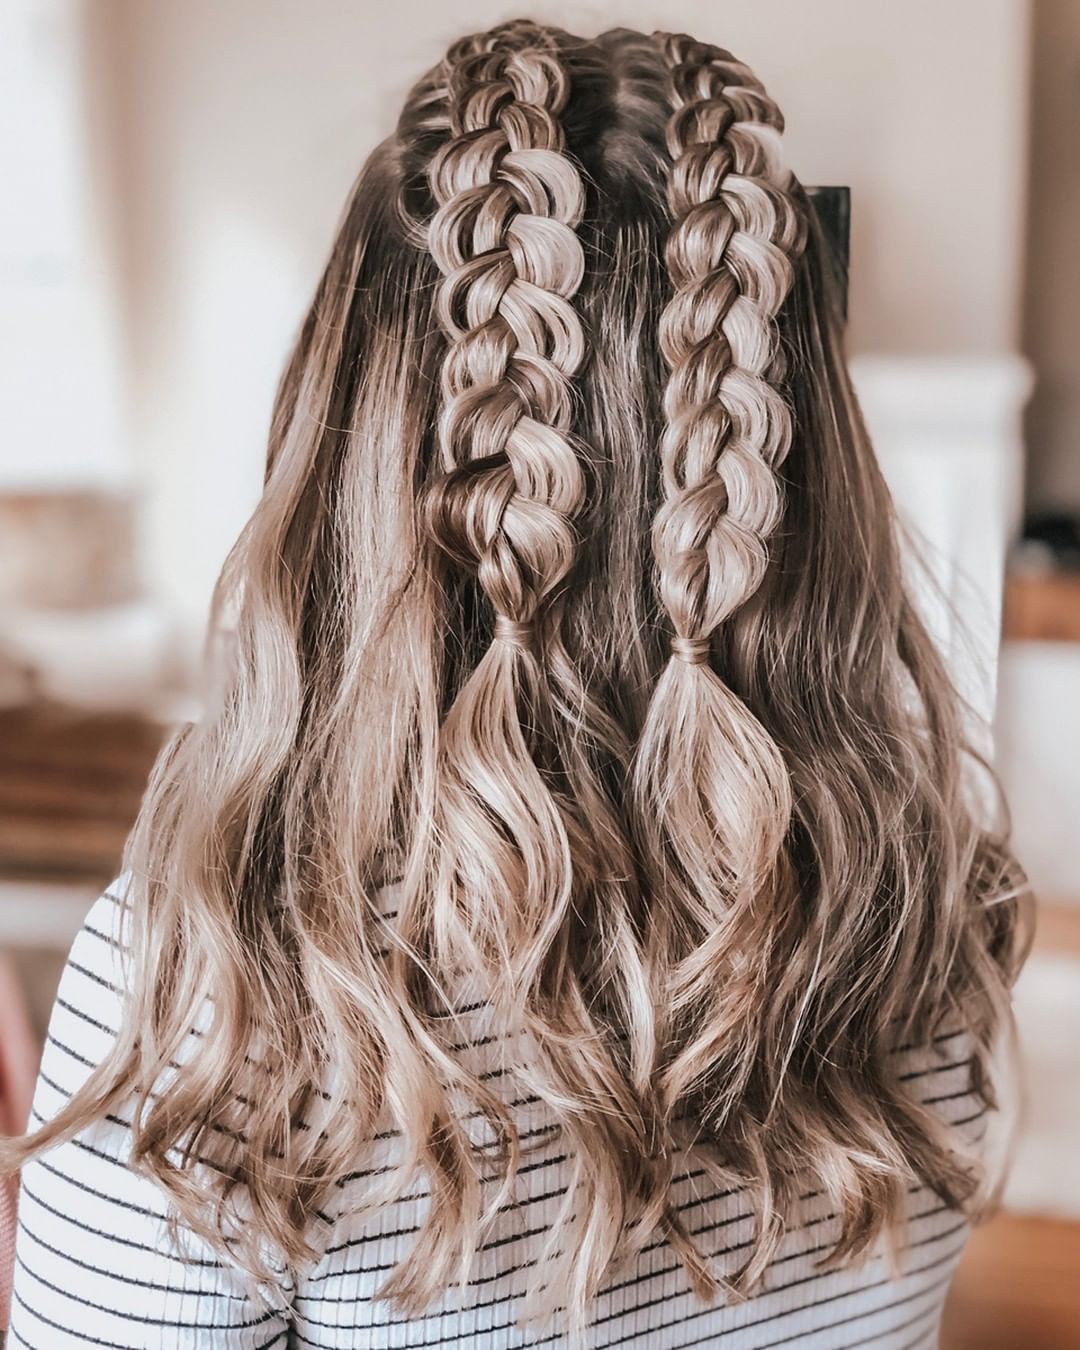 Hairstyles 2019 - SalePrice:13$ -   19 hairstyles Women to get ideas